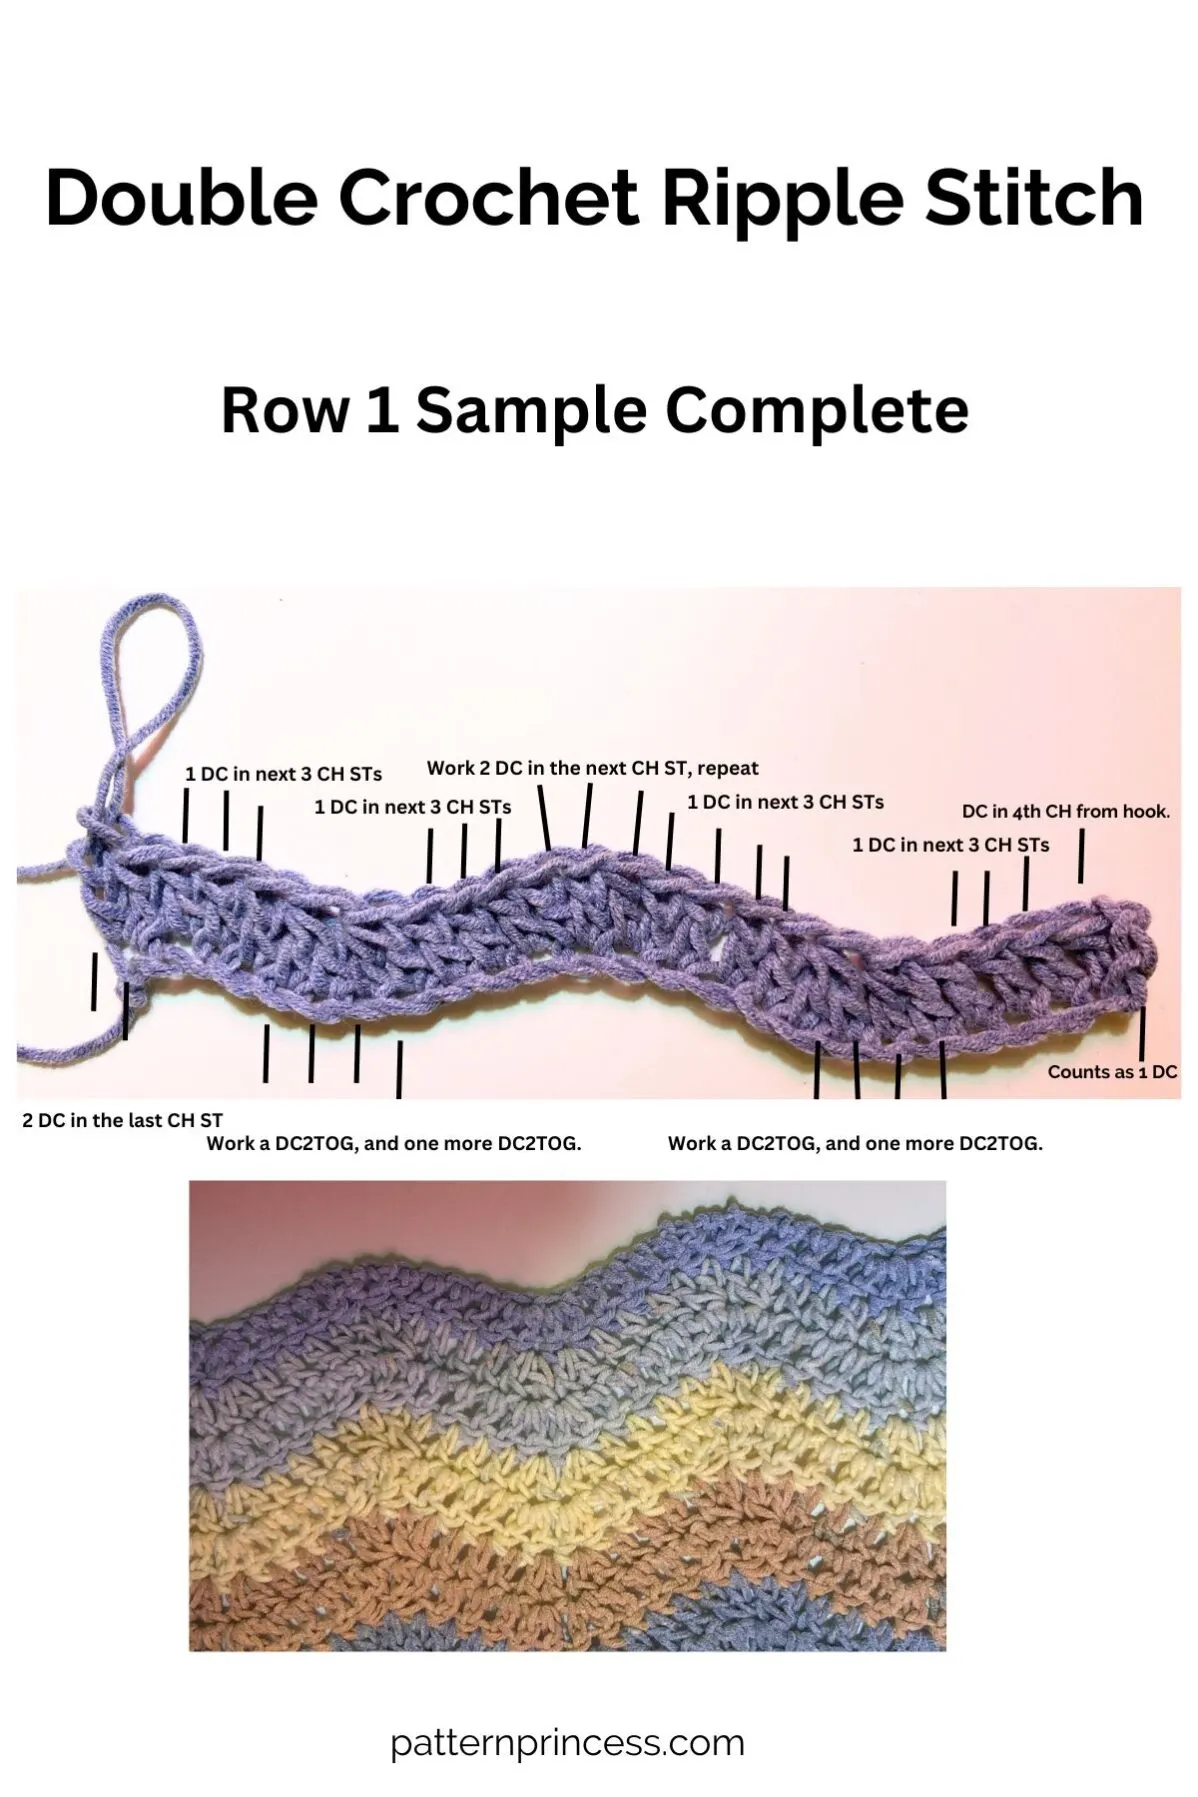 Row 1 Sample Ripple Stitch Complete